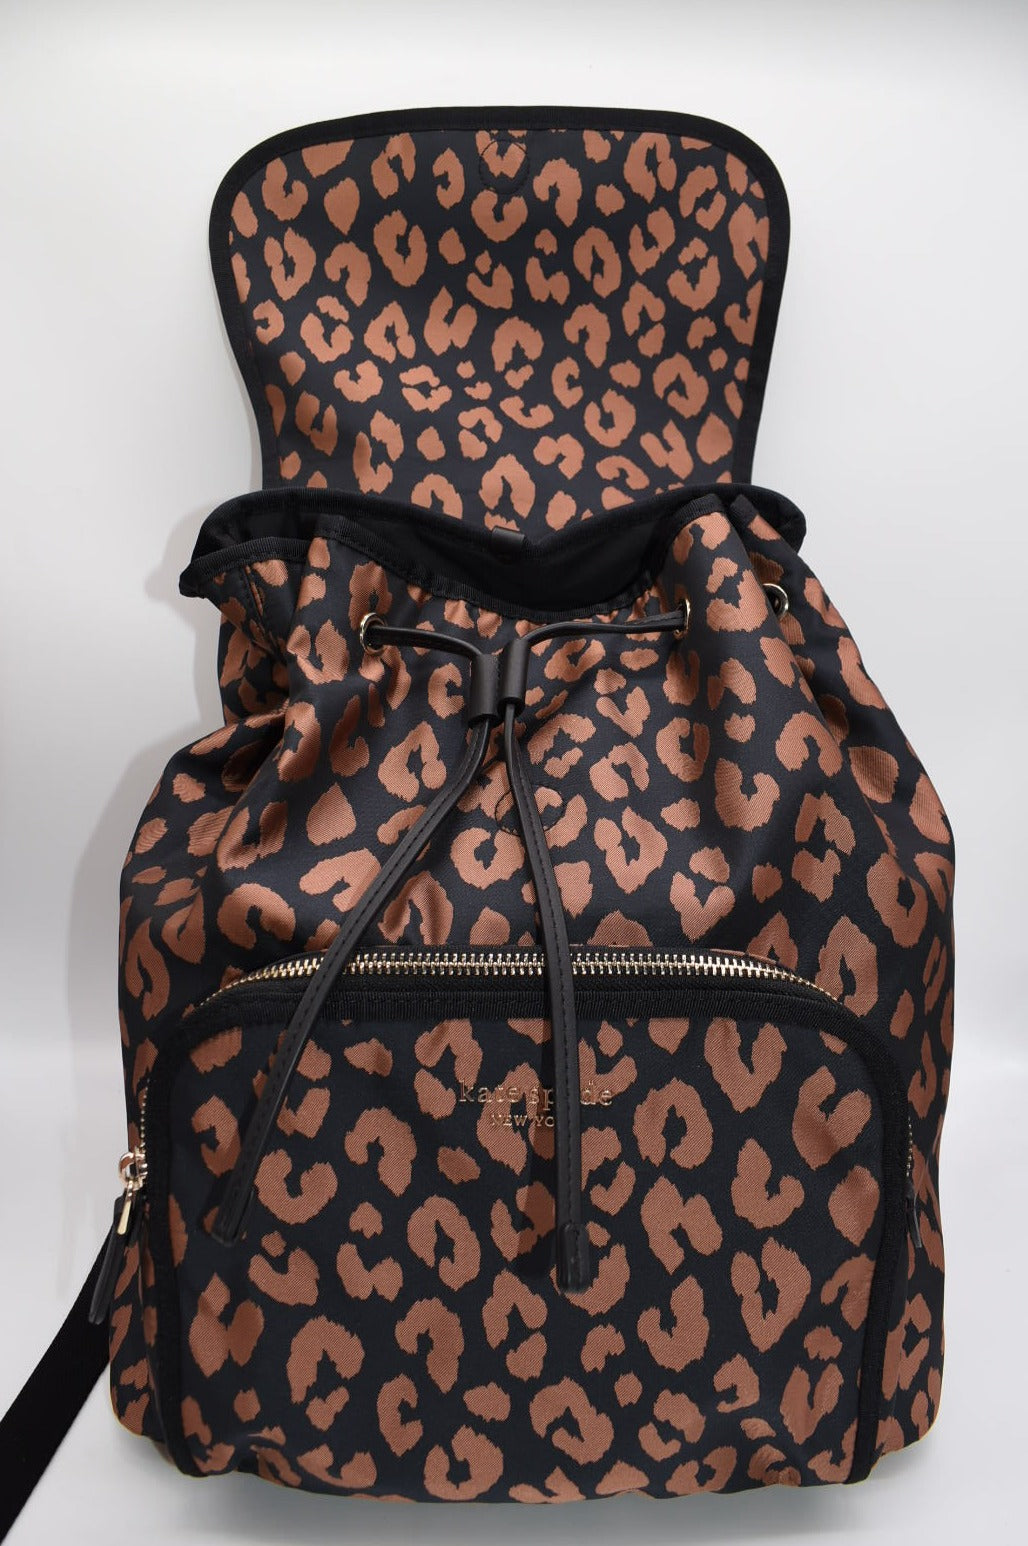 Kate Spade The Little Better Sam Leopard Medium Backpack